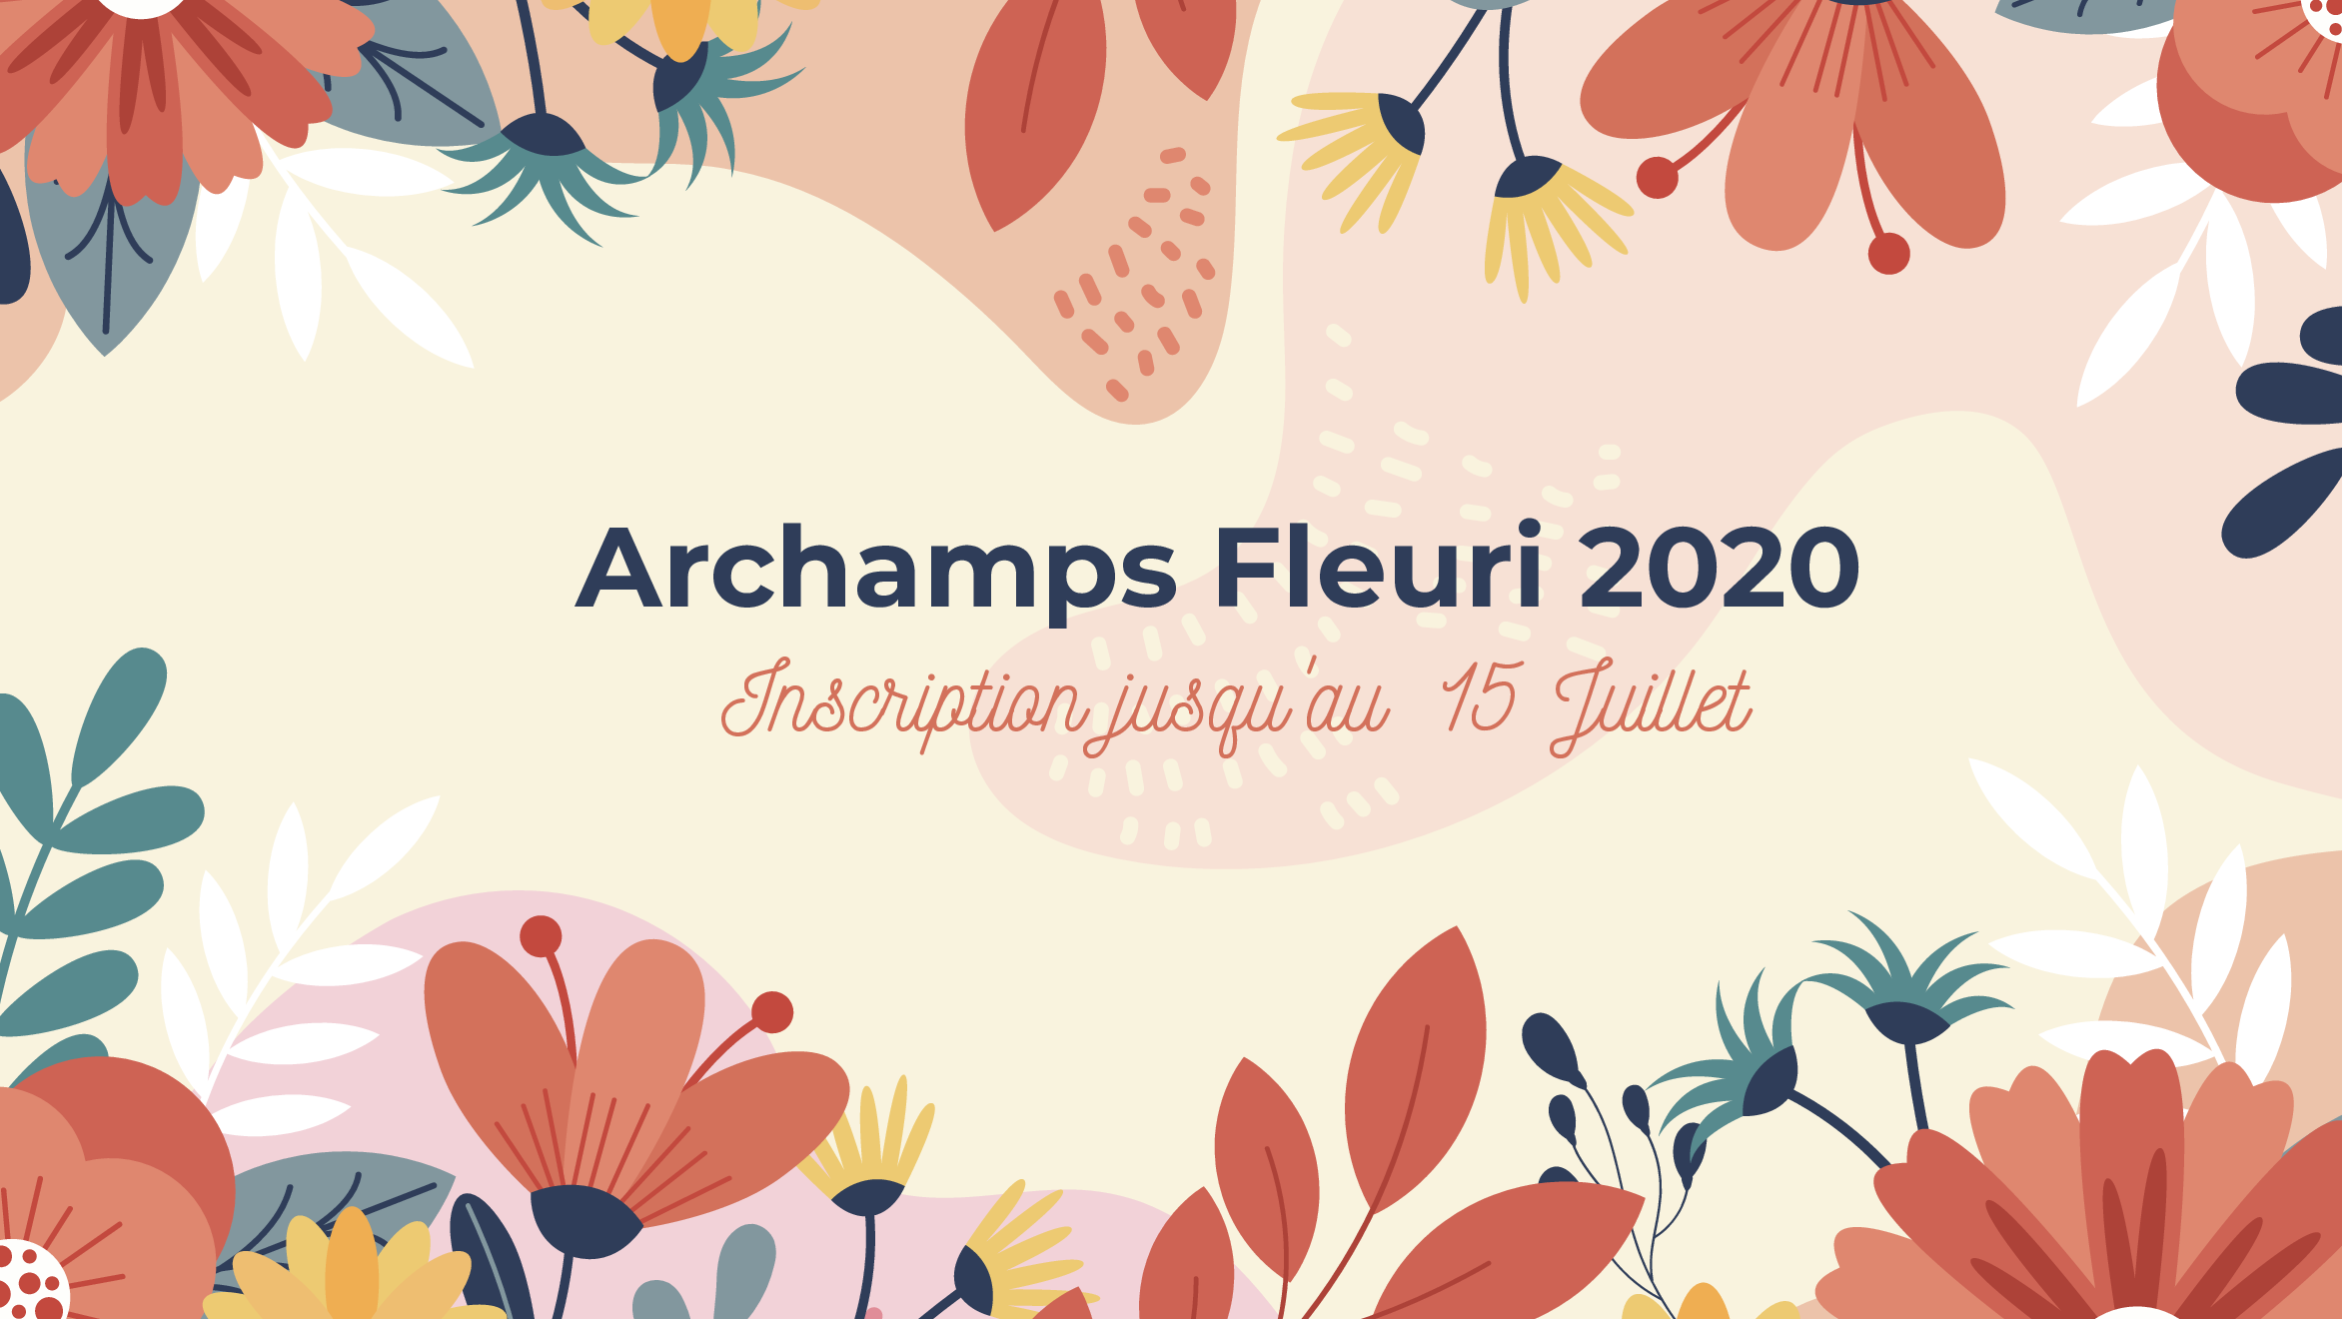 Archamps fleuri 2020